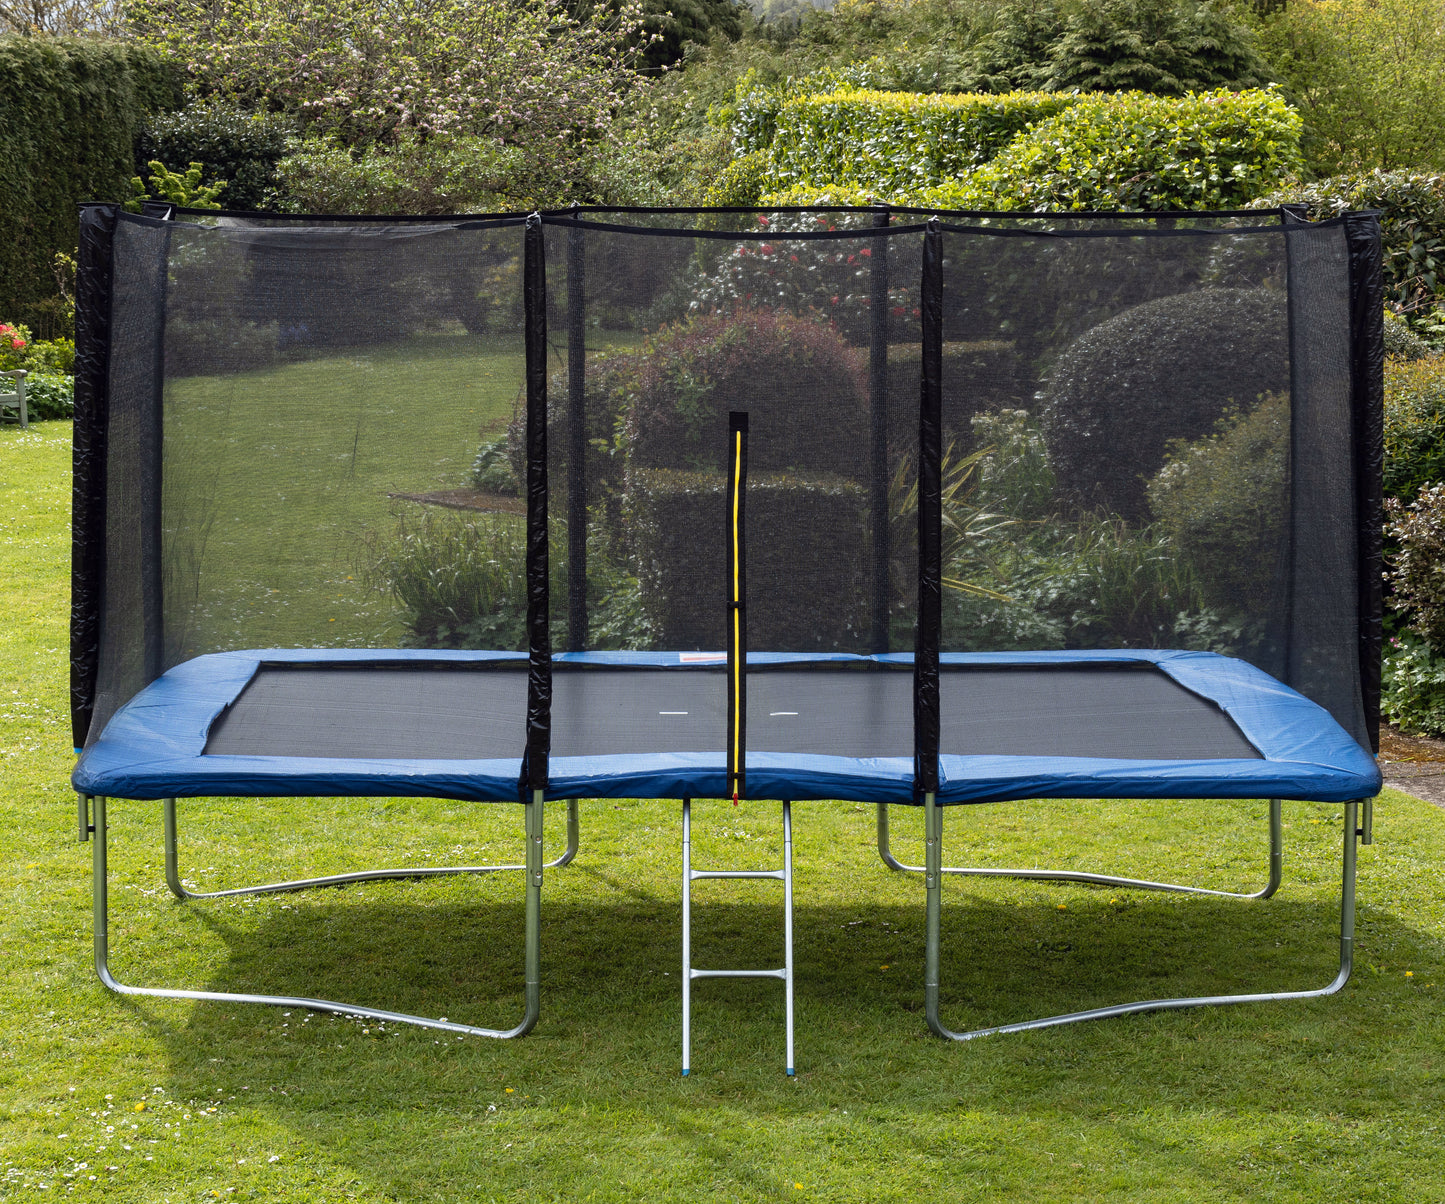 Kanga Blue 9x14ft trampoline package